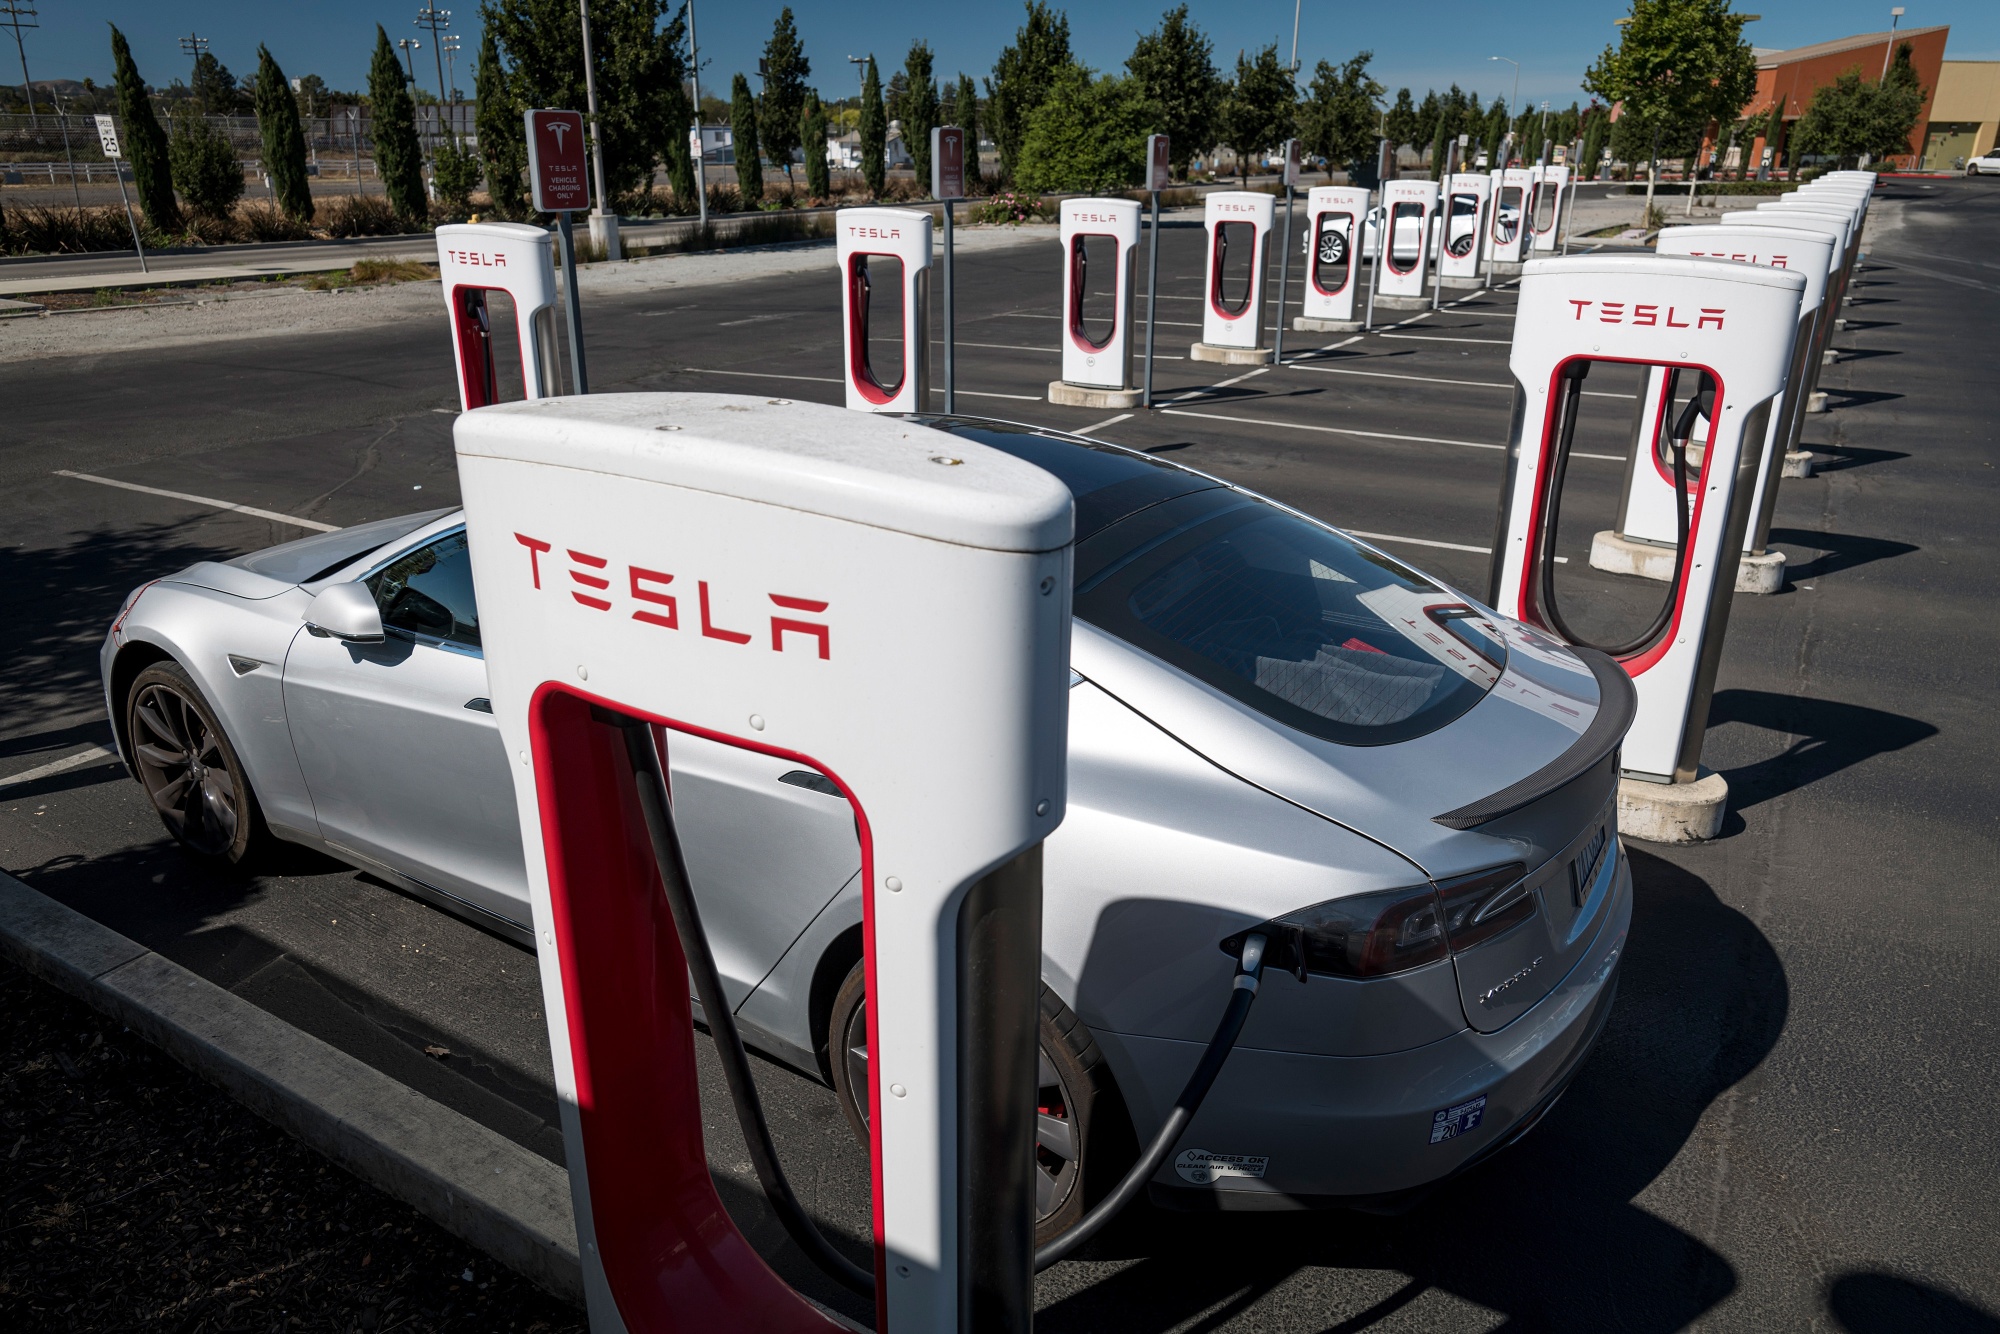 A Tesla Inc. vehicle charging at a Tesla Supercharger station in Petalama, California.